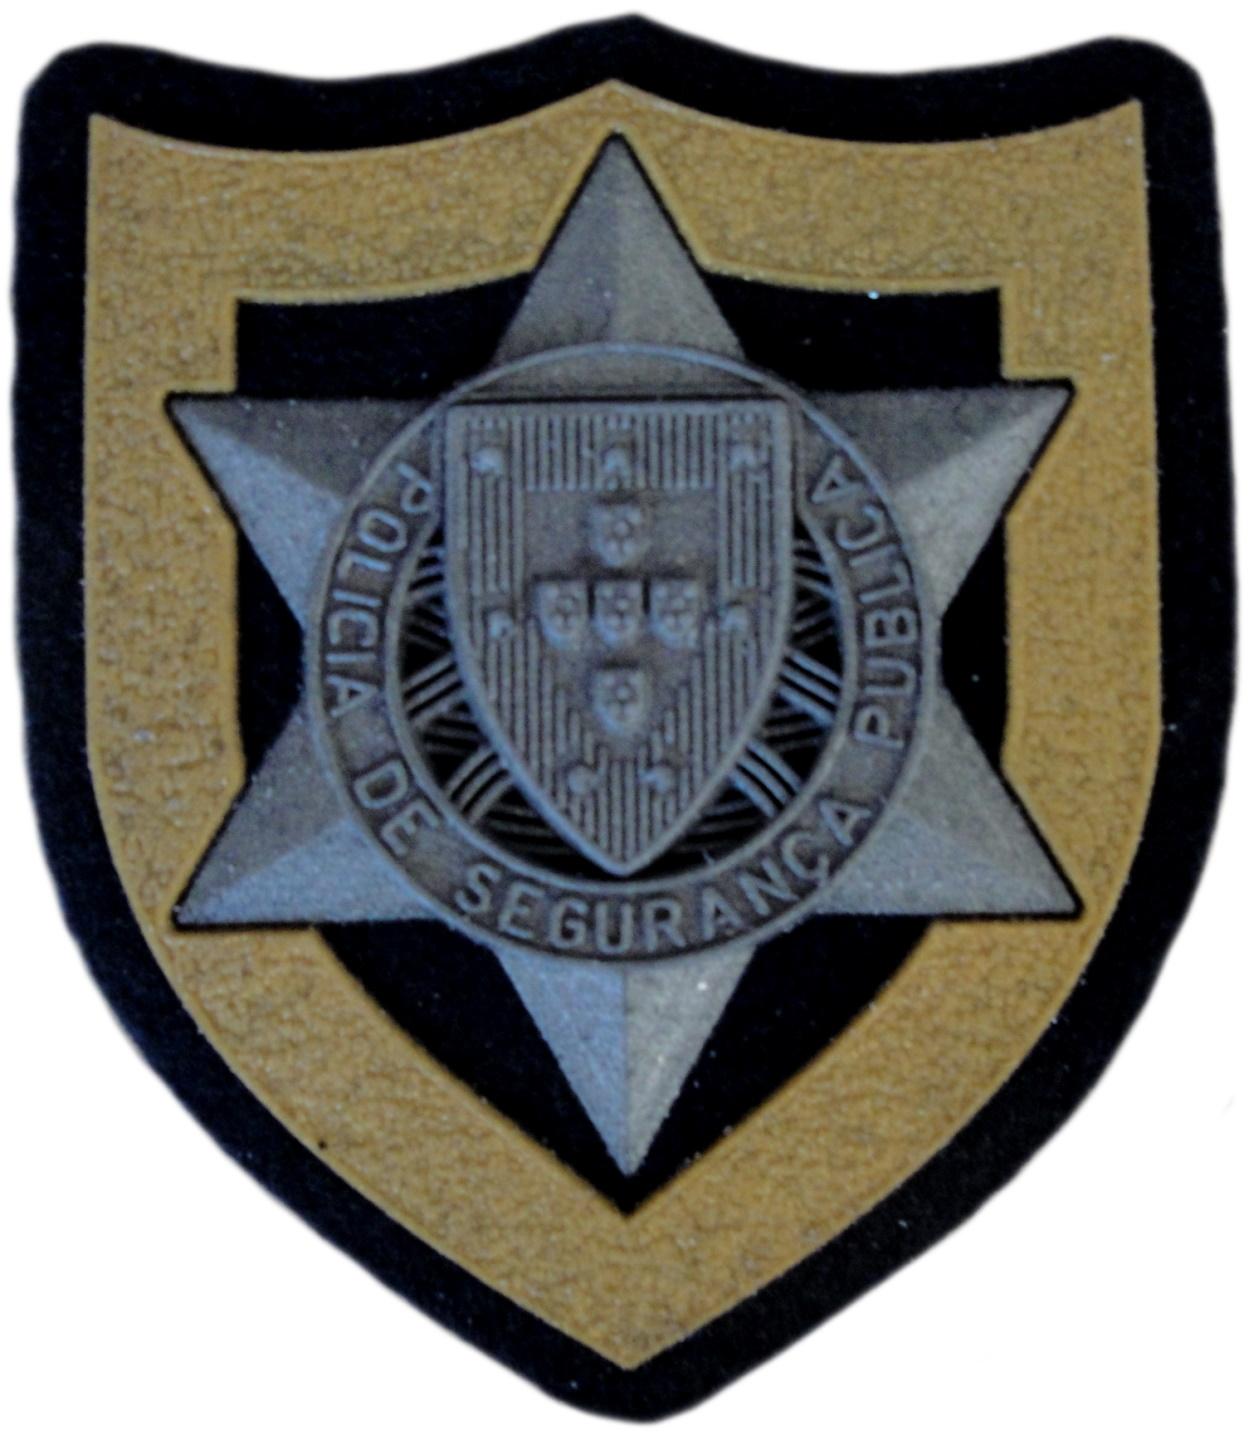 Policía de Segurança Pública de Portugal Policía Nacional Portuguesa parche insignia emblema de pecho Police dept